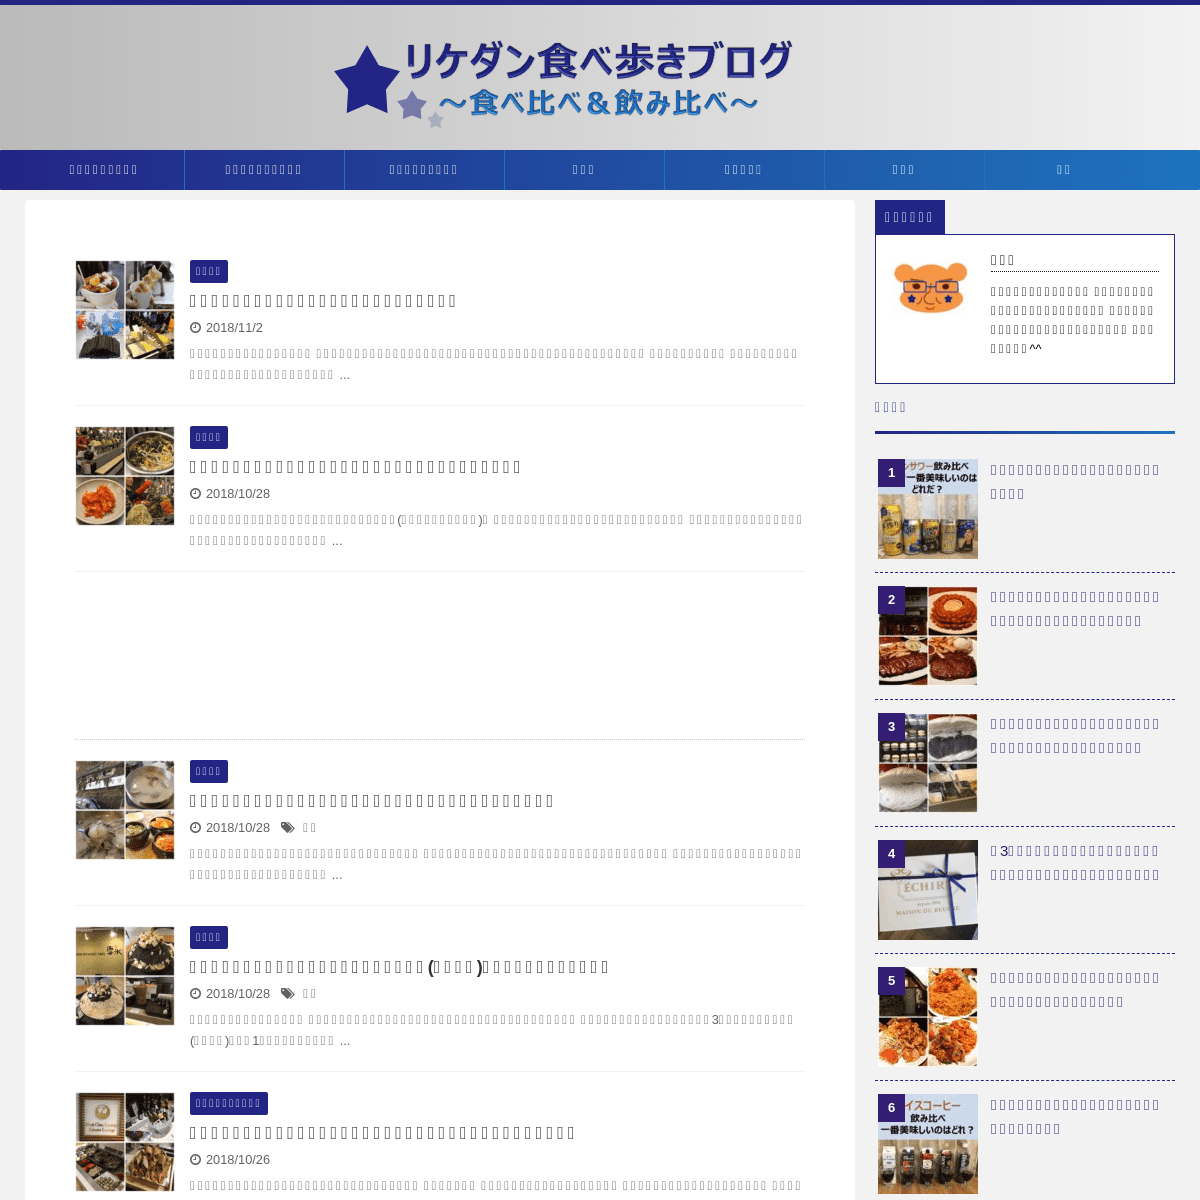 A complete backup of minami-tabearuki.com